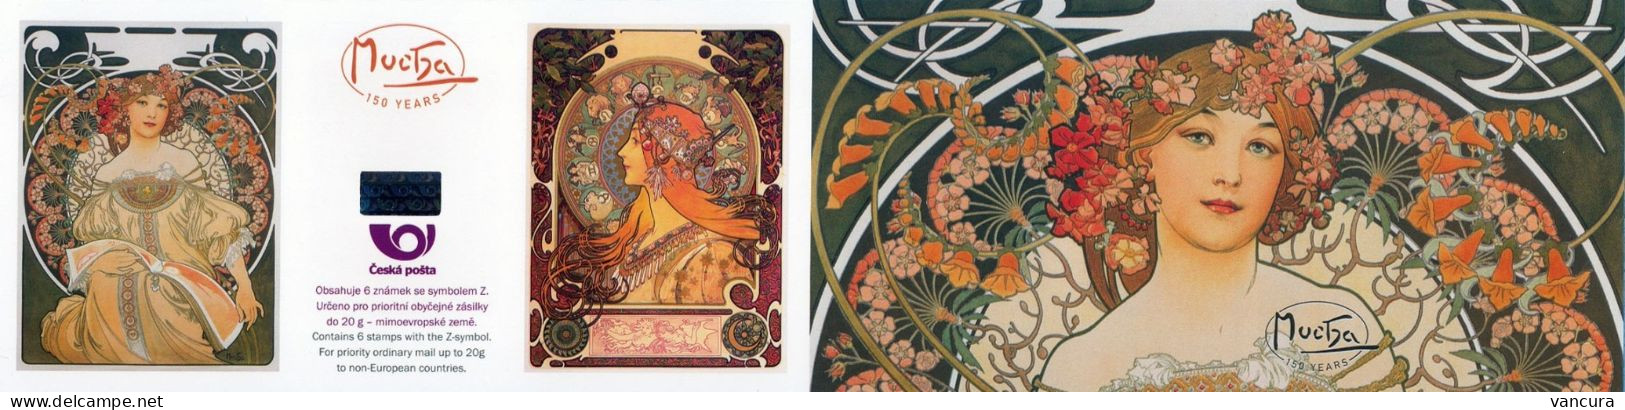 ** Booklet 635 A Czech Republic Alfons Mucha Zodiac Signs 2010 Pink Logo 1st Plate - Mythology